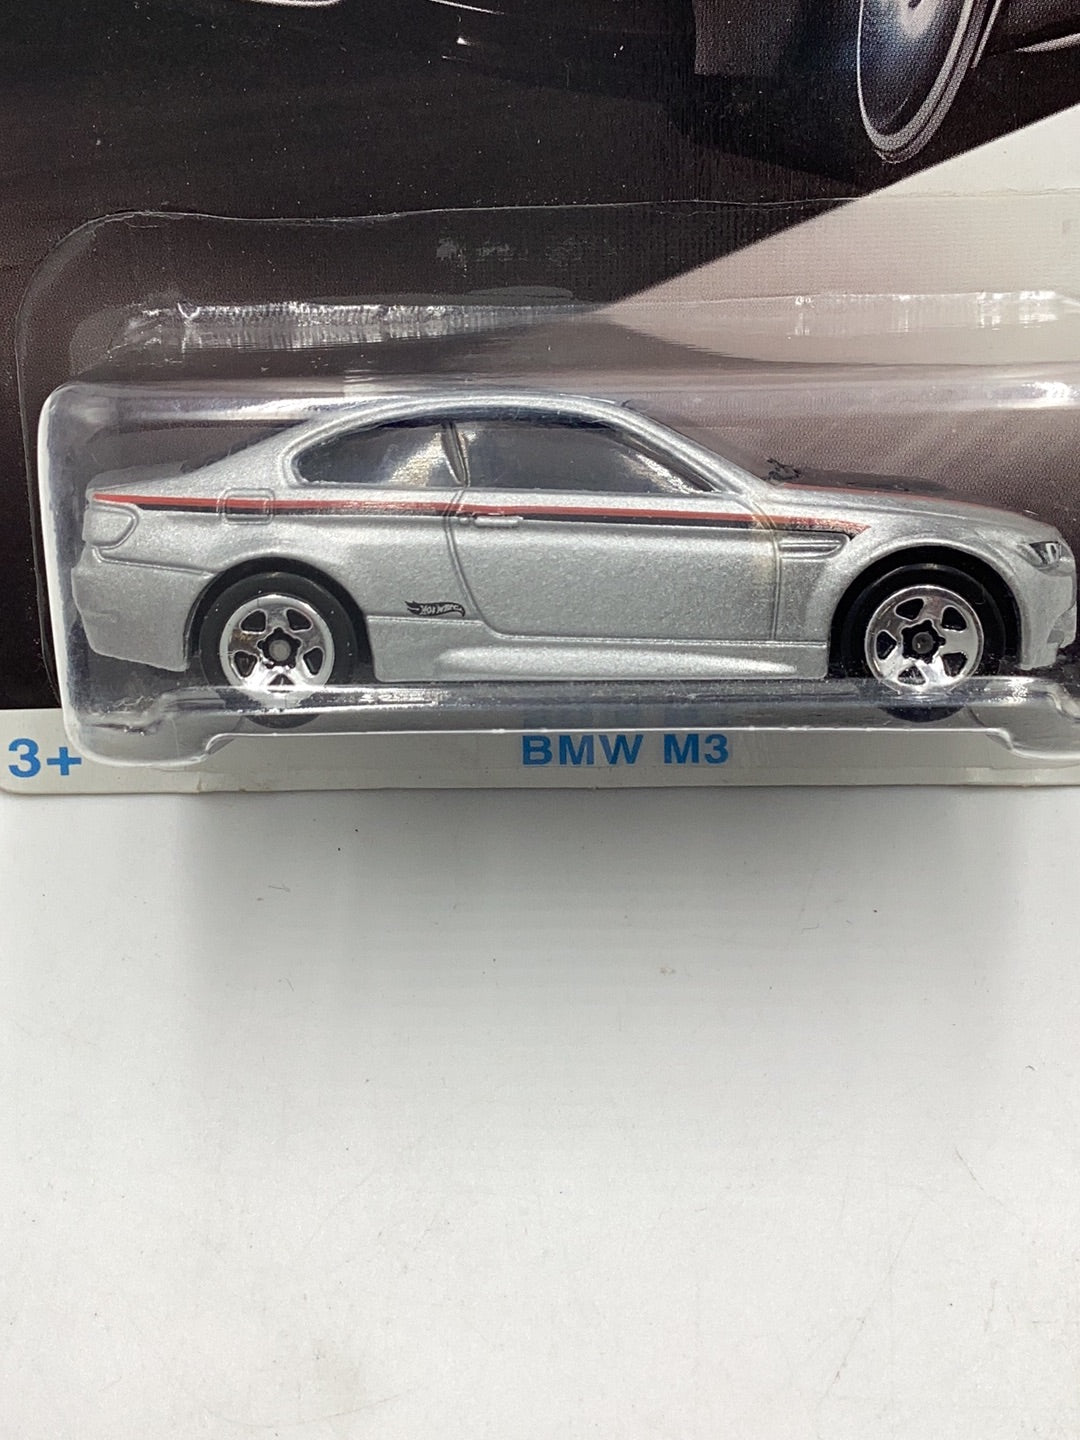 Hot wheels BMW series BMW M3 Walmart exclusive 6/8 cracked blister